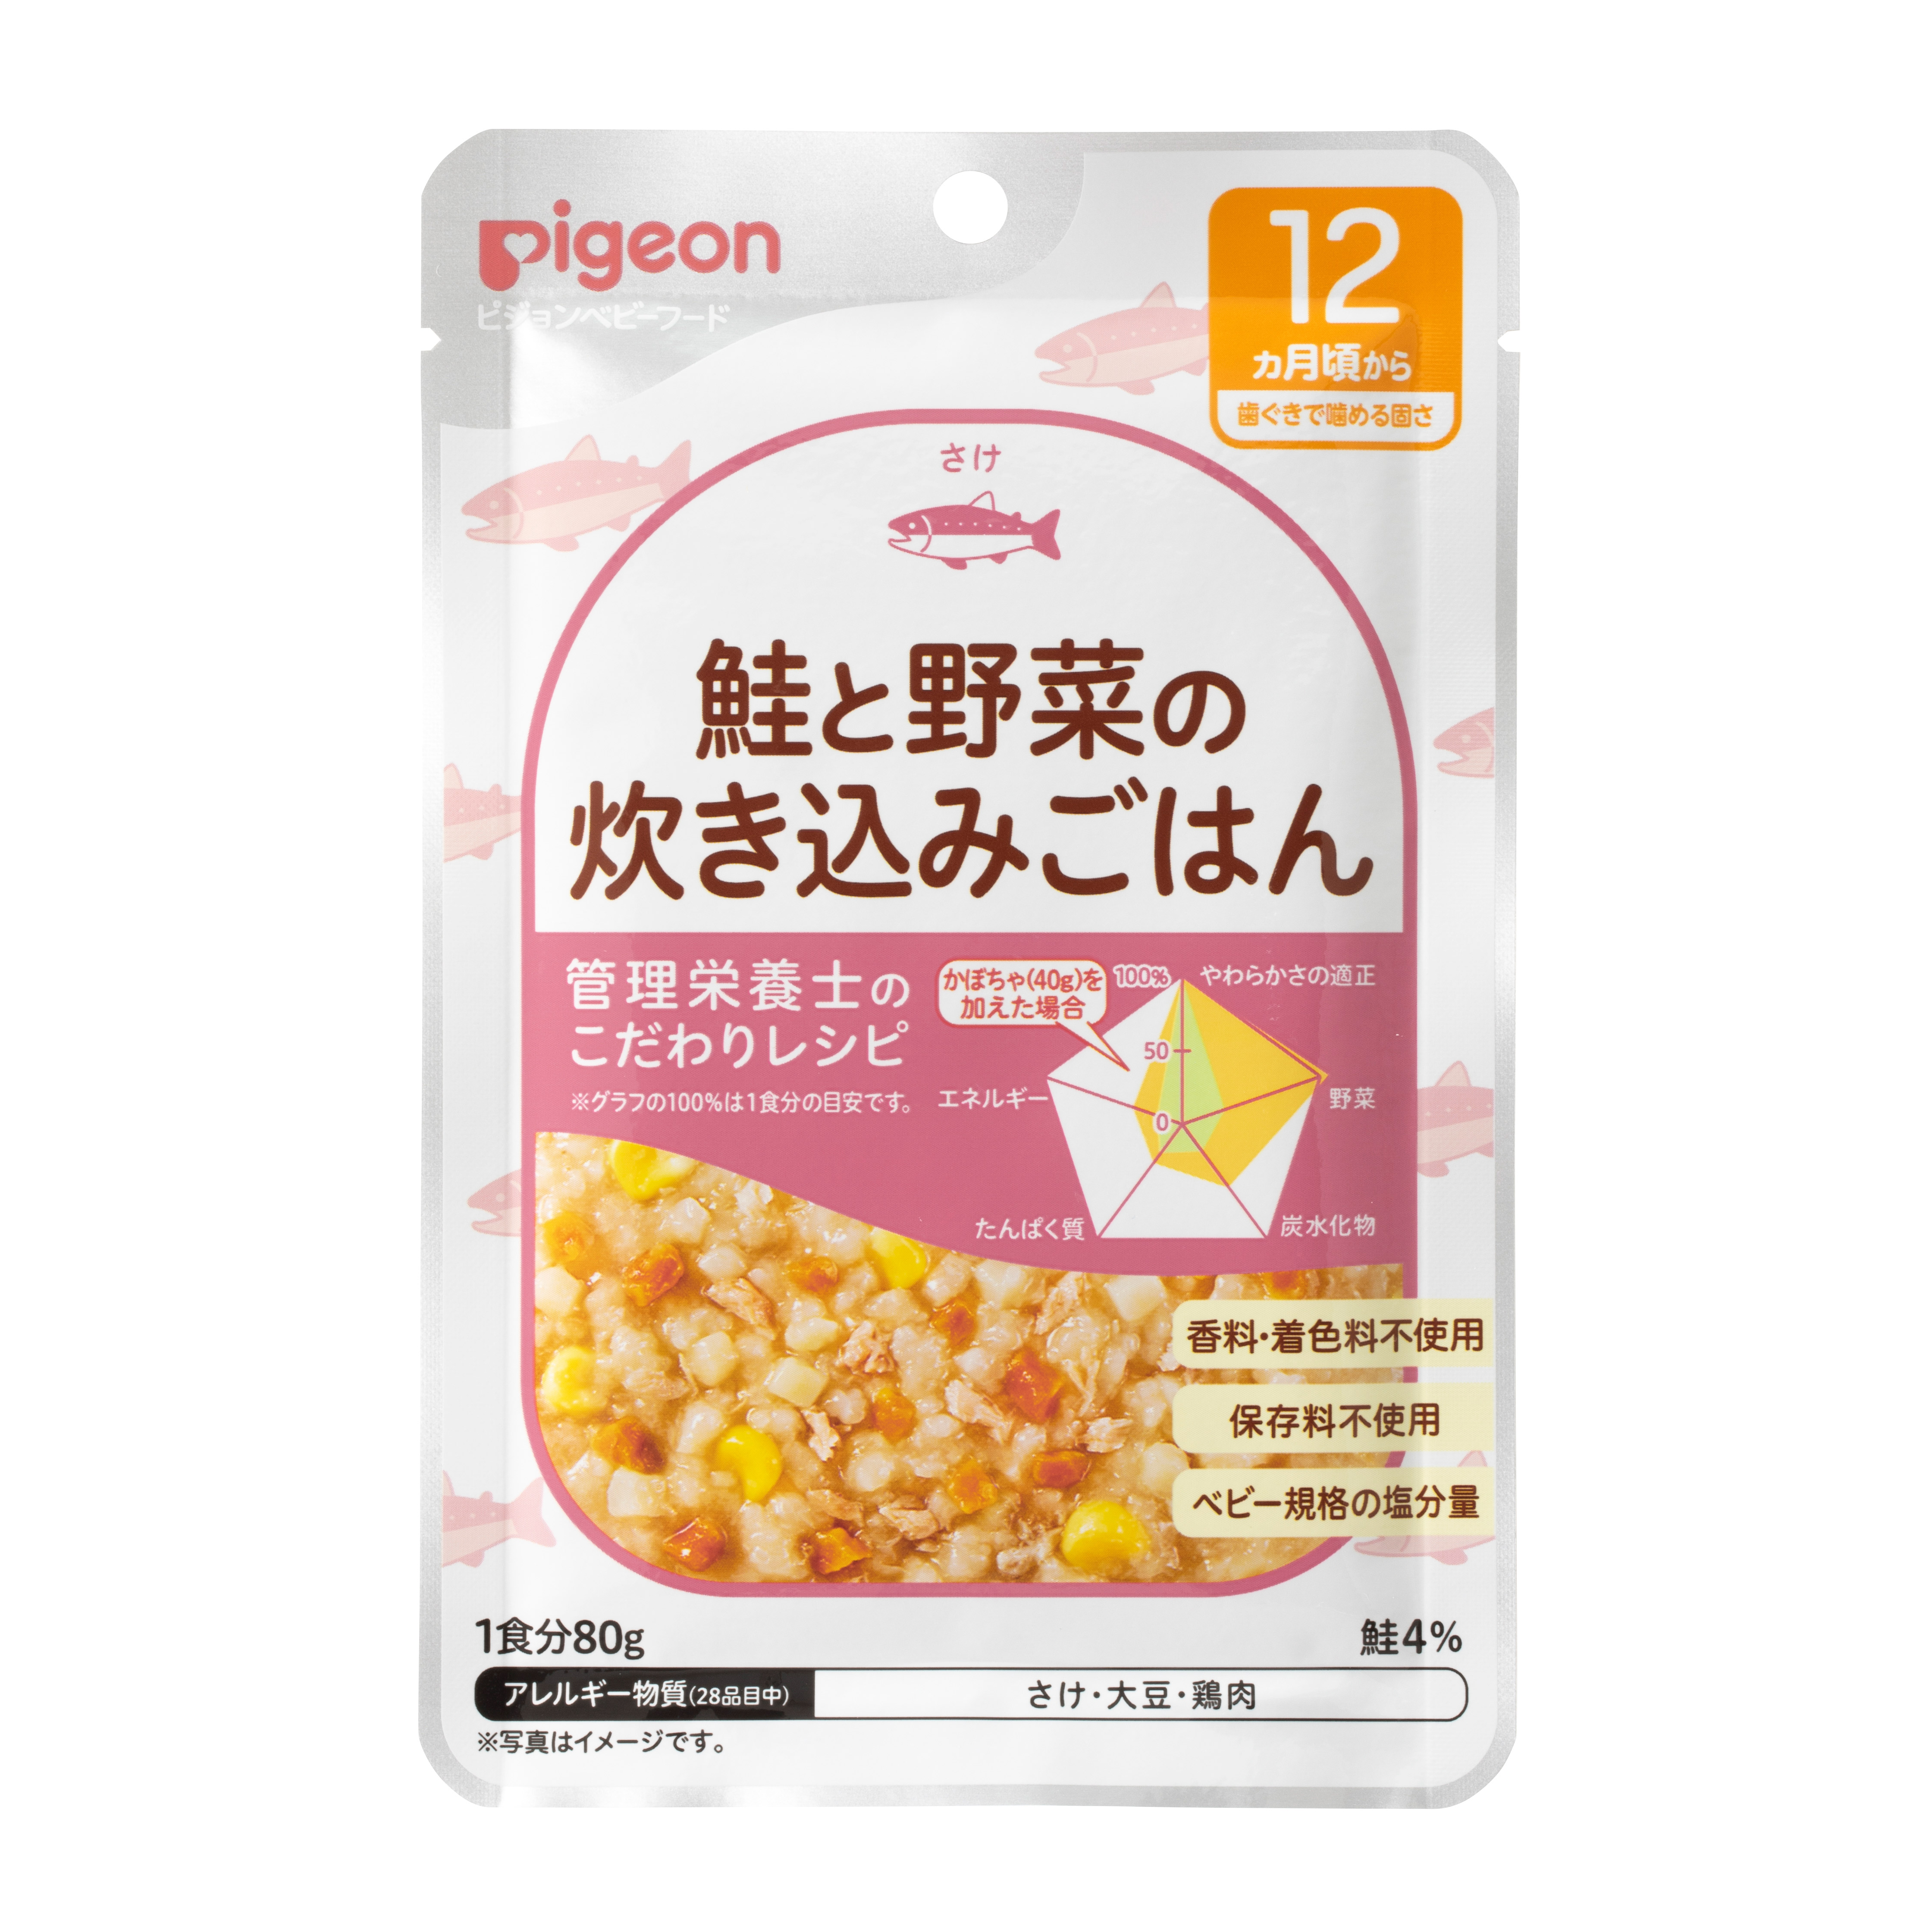 Pigeon Retort Baby Food Salmon & Veggie Rice (PG-1024883)